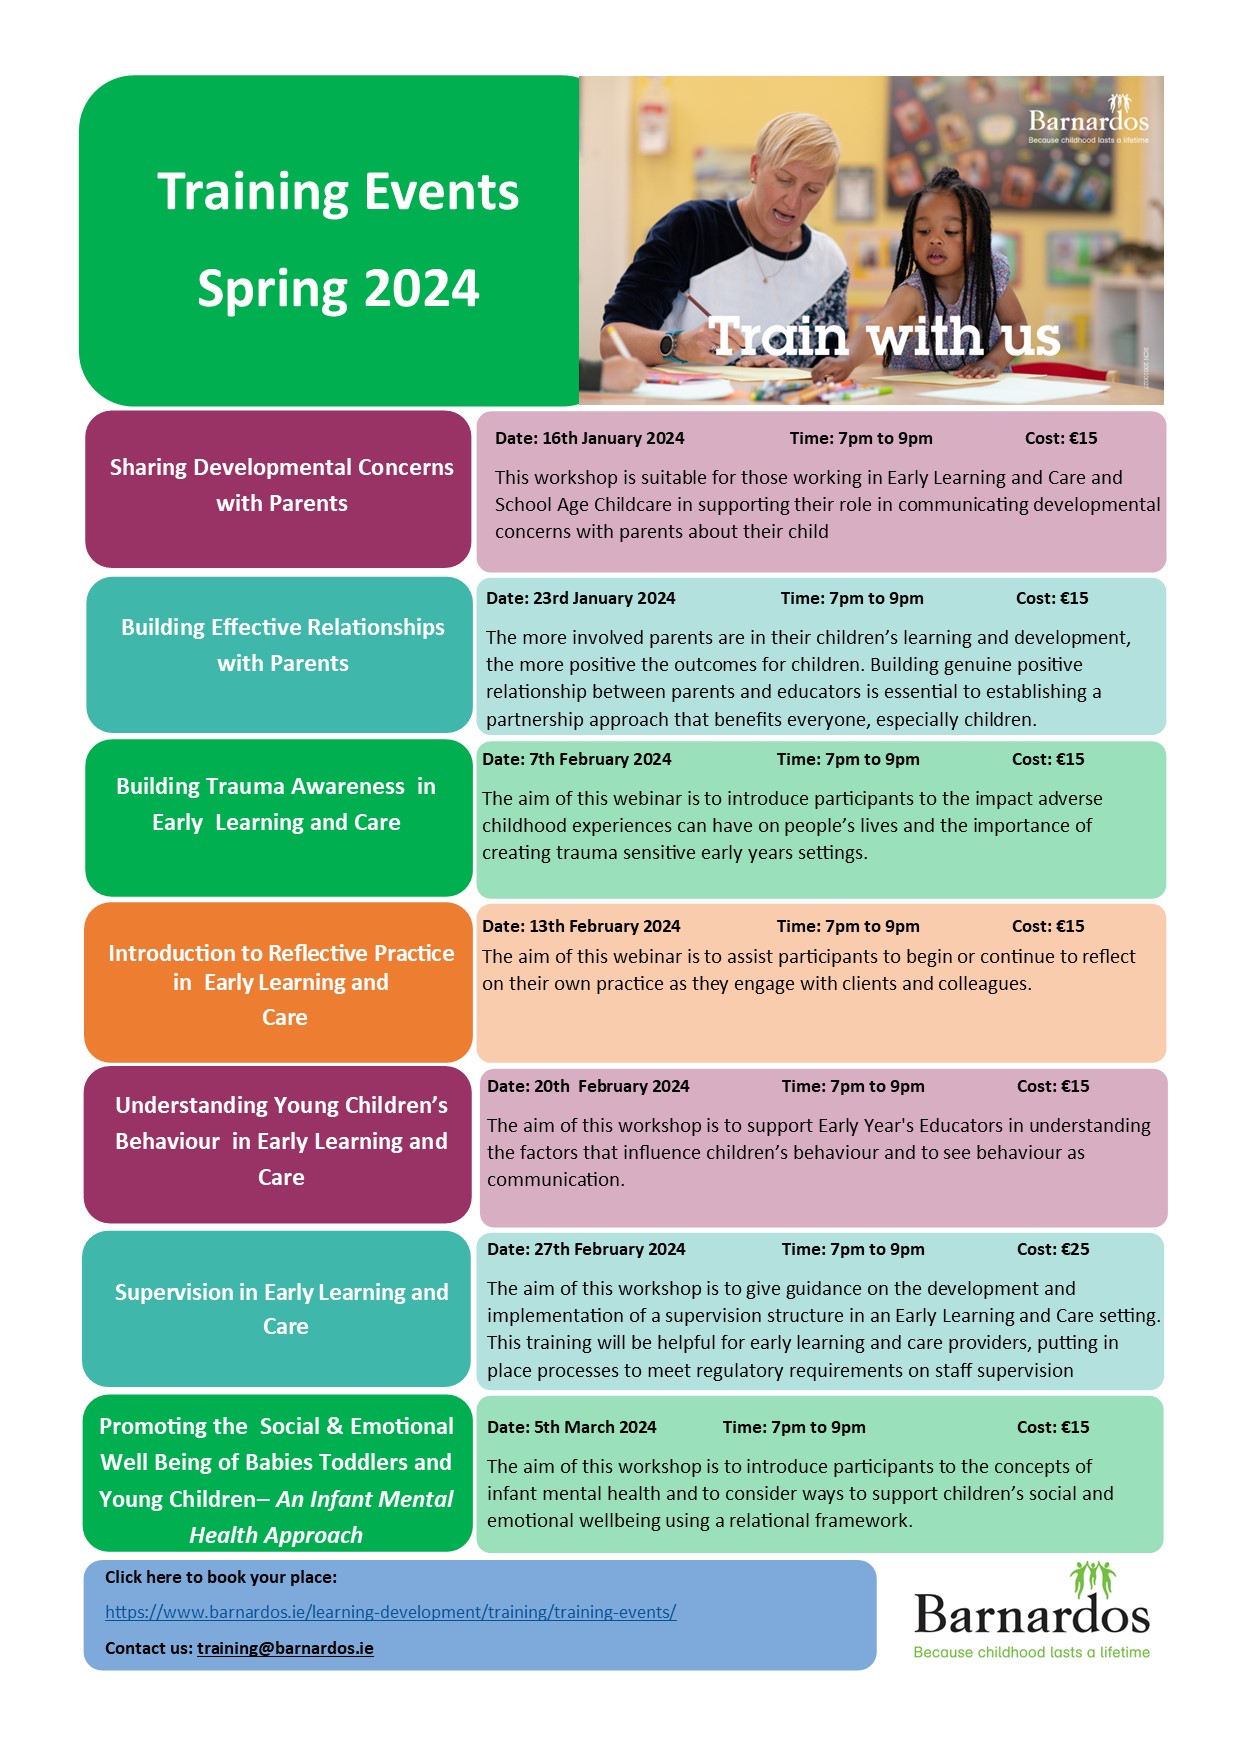 Barnardos Training Events for Spring 2024 The Wheel